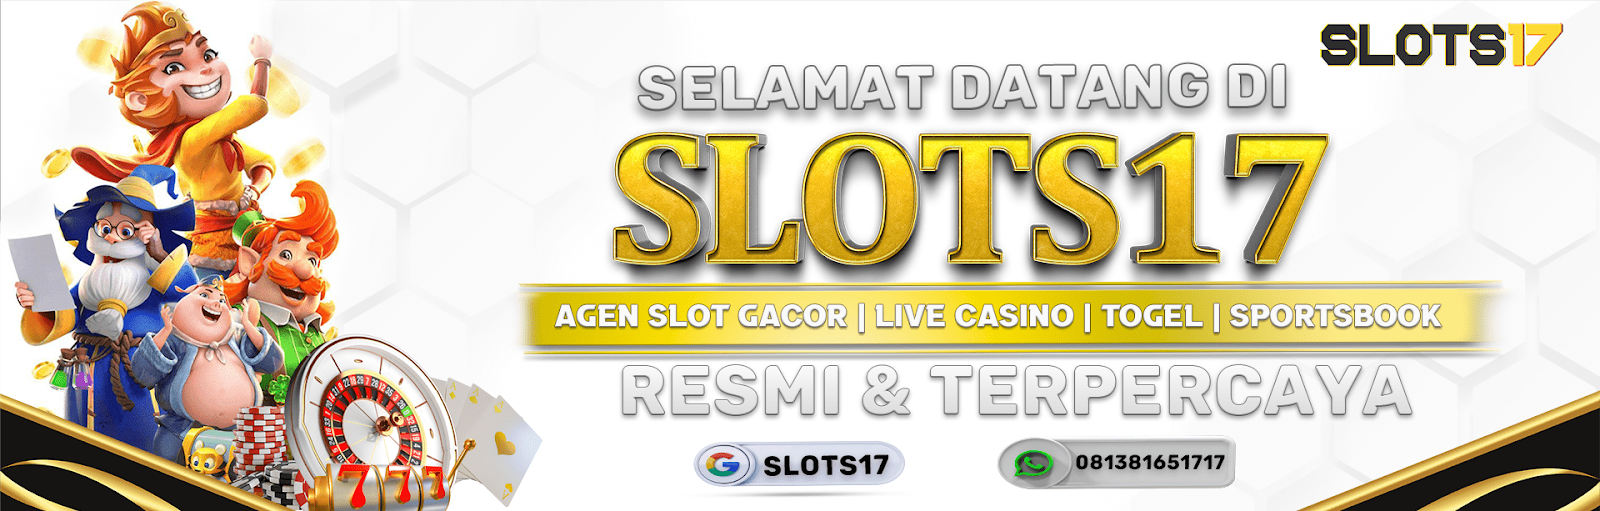    Slots17 - The Best Online Casino Games